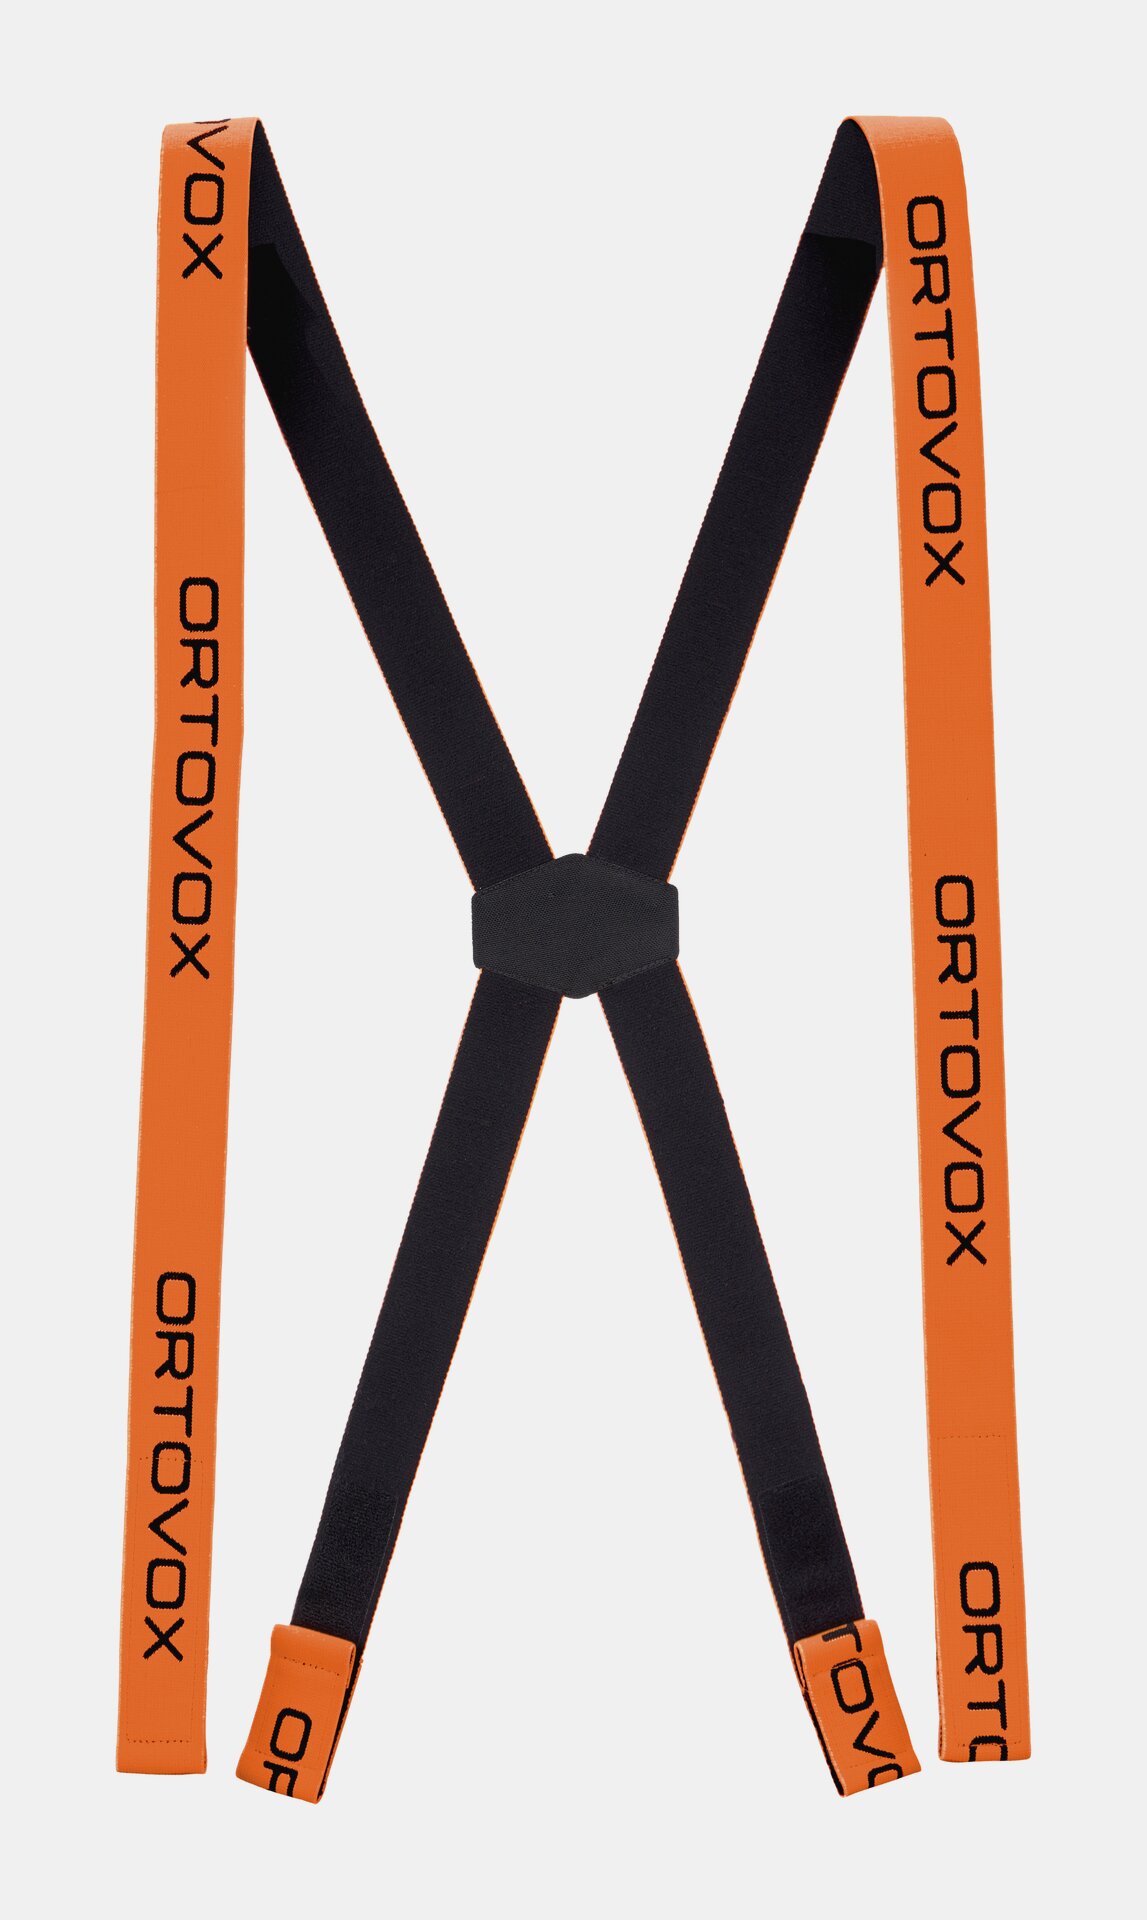 Ortovox Suspenders/Hosenträger orange